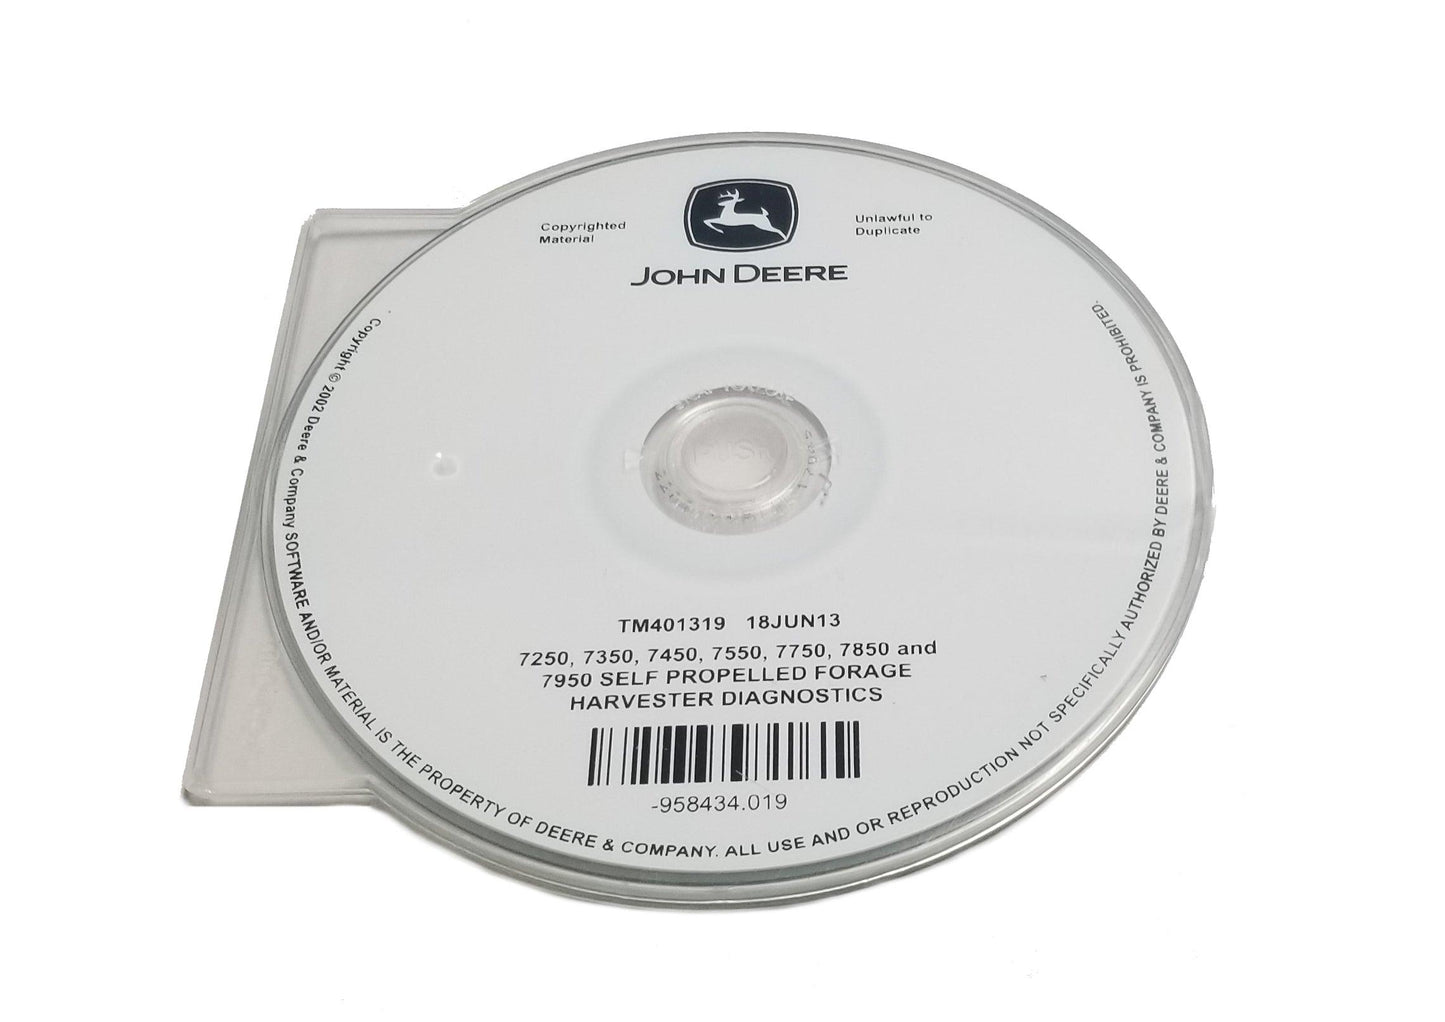 John Deere 7250/7350/7450/7550/7750/7850/7950 Self Propelled Forage Harvester Technical CD Manual - TM401319CD